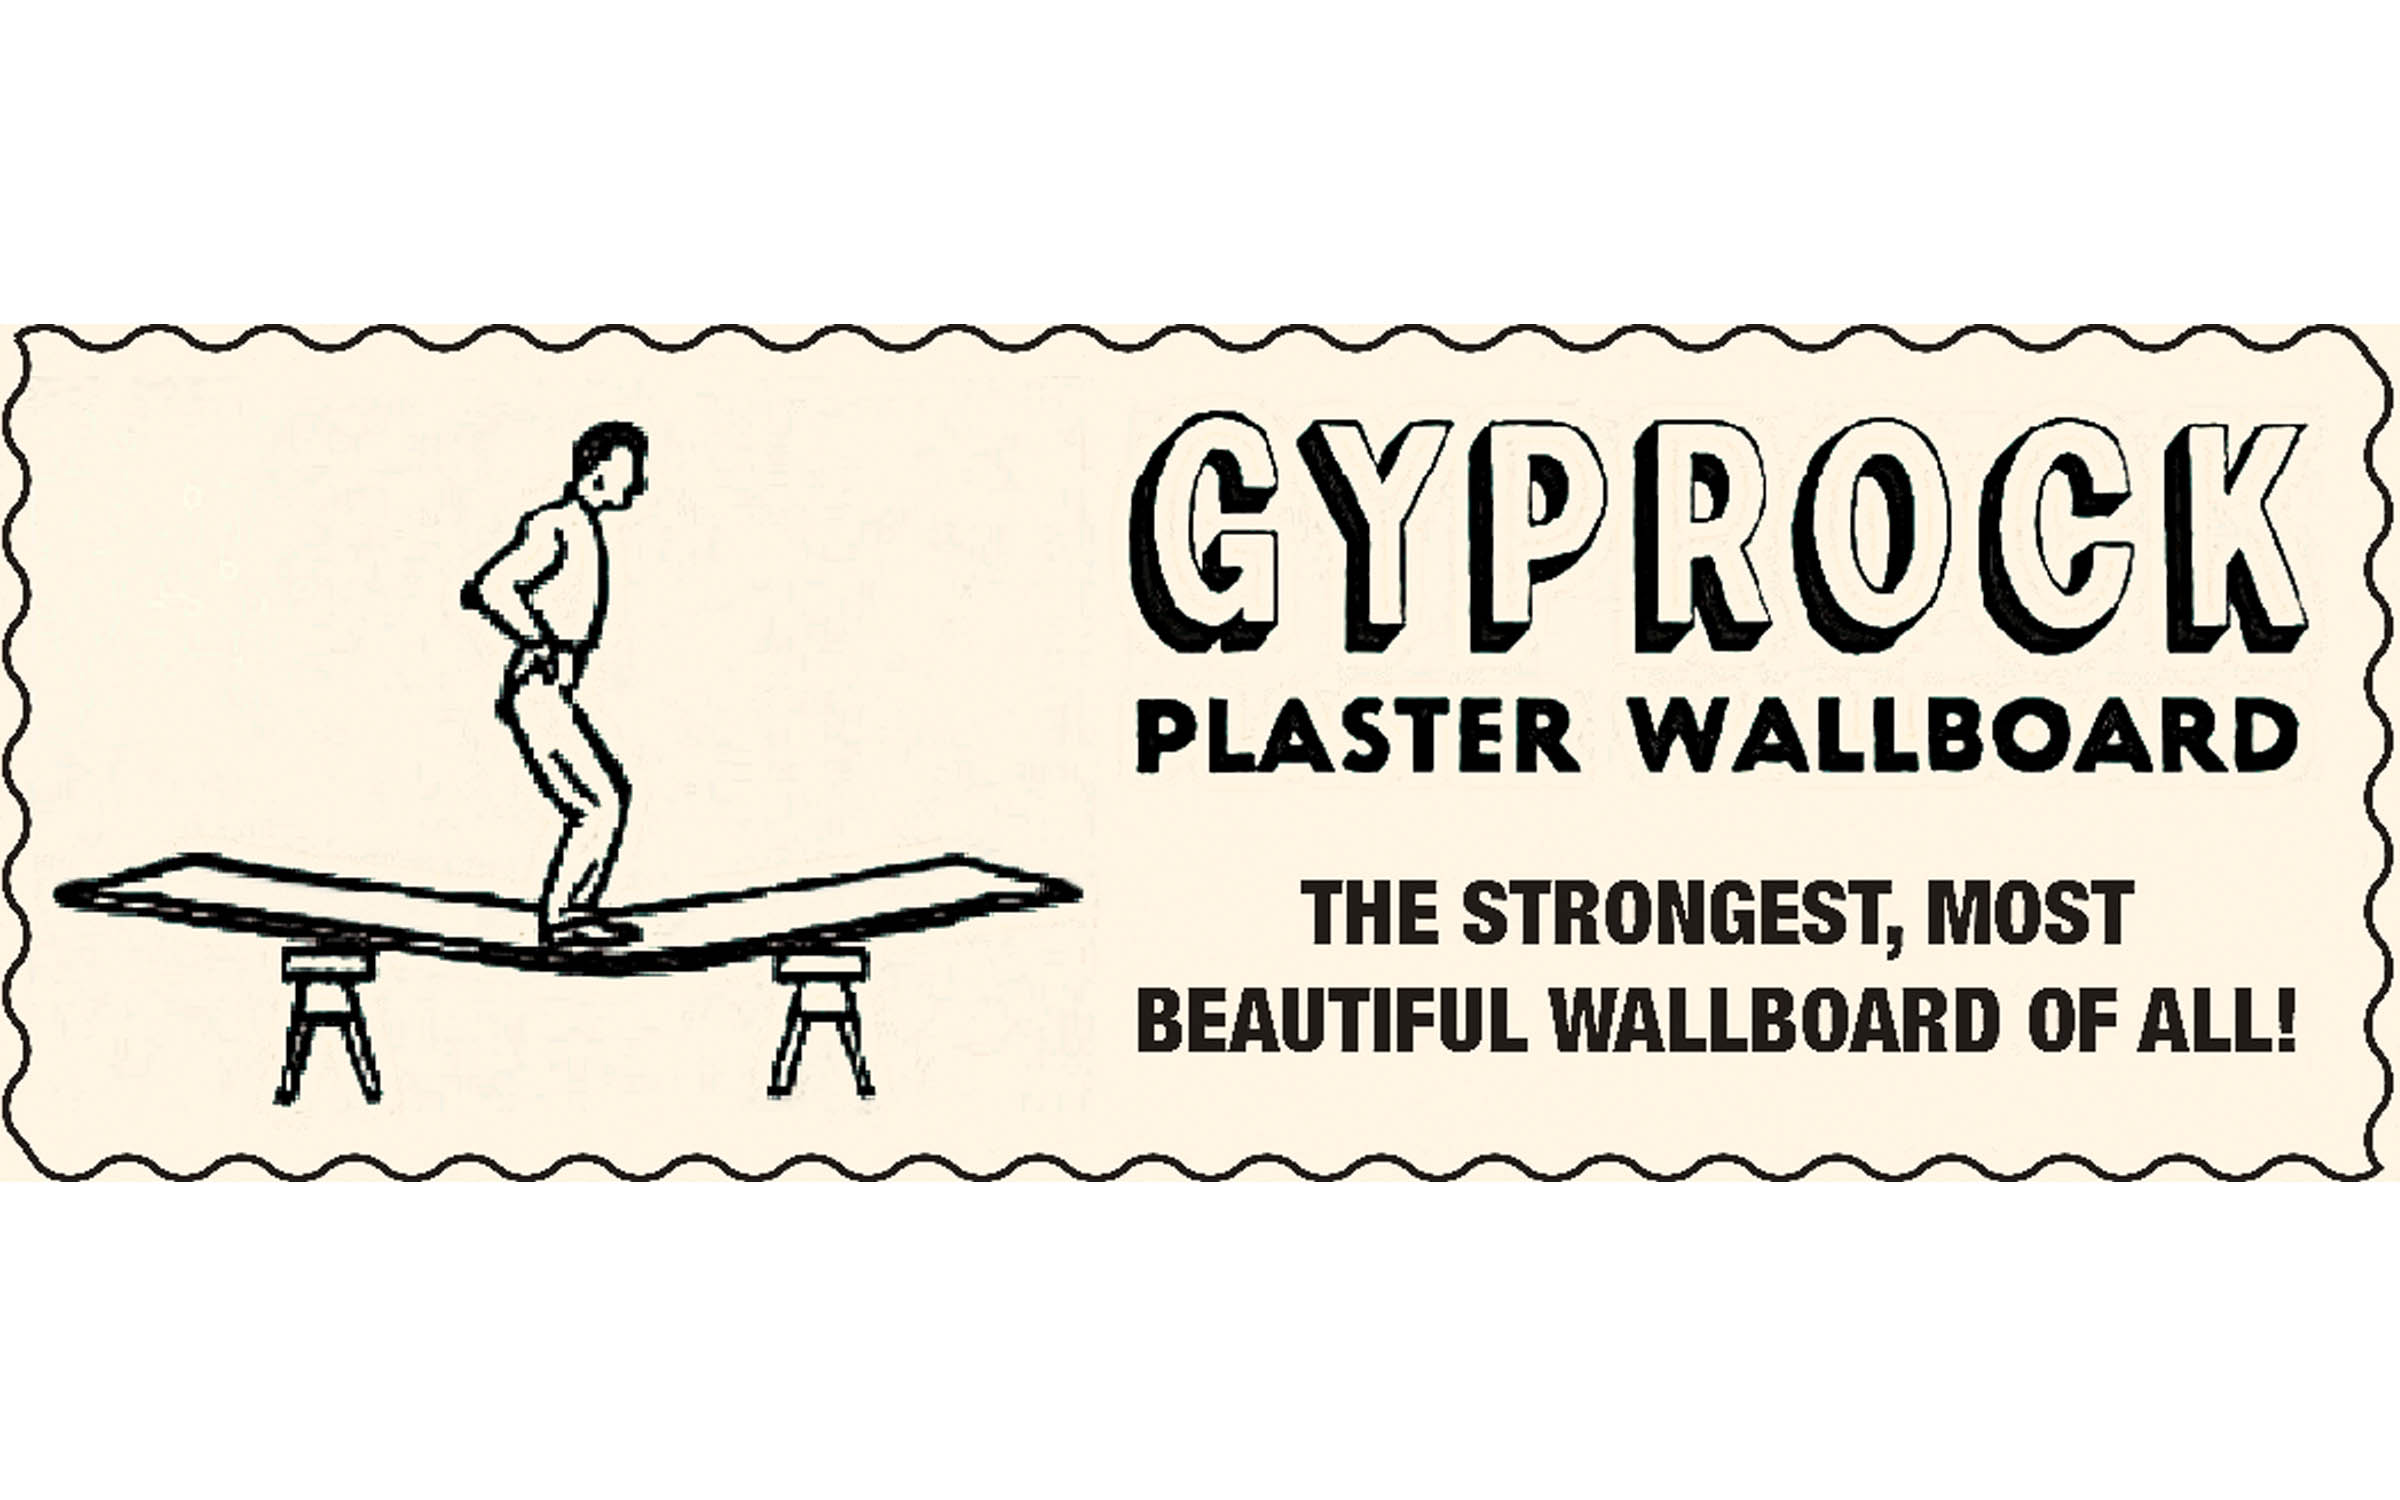 Old historical Gyprock Plaster Wallboard ad